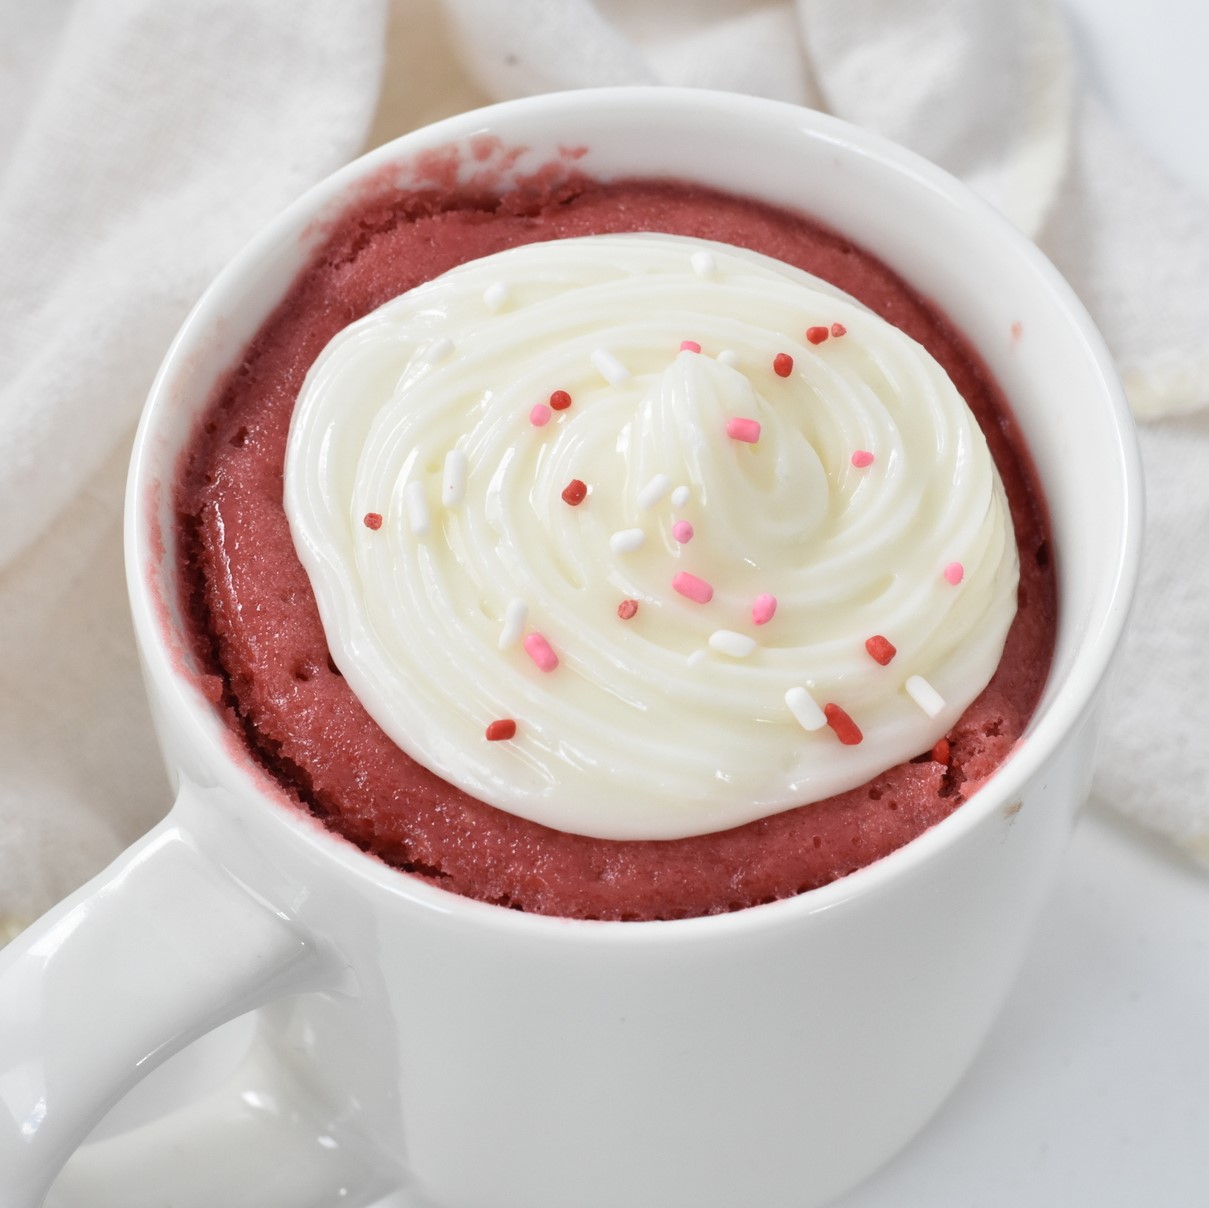 Red Velvet Mug cake with Frosting and Sprinkles